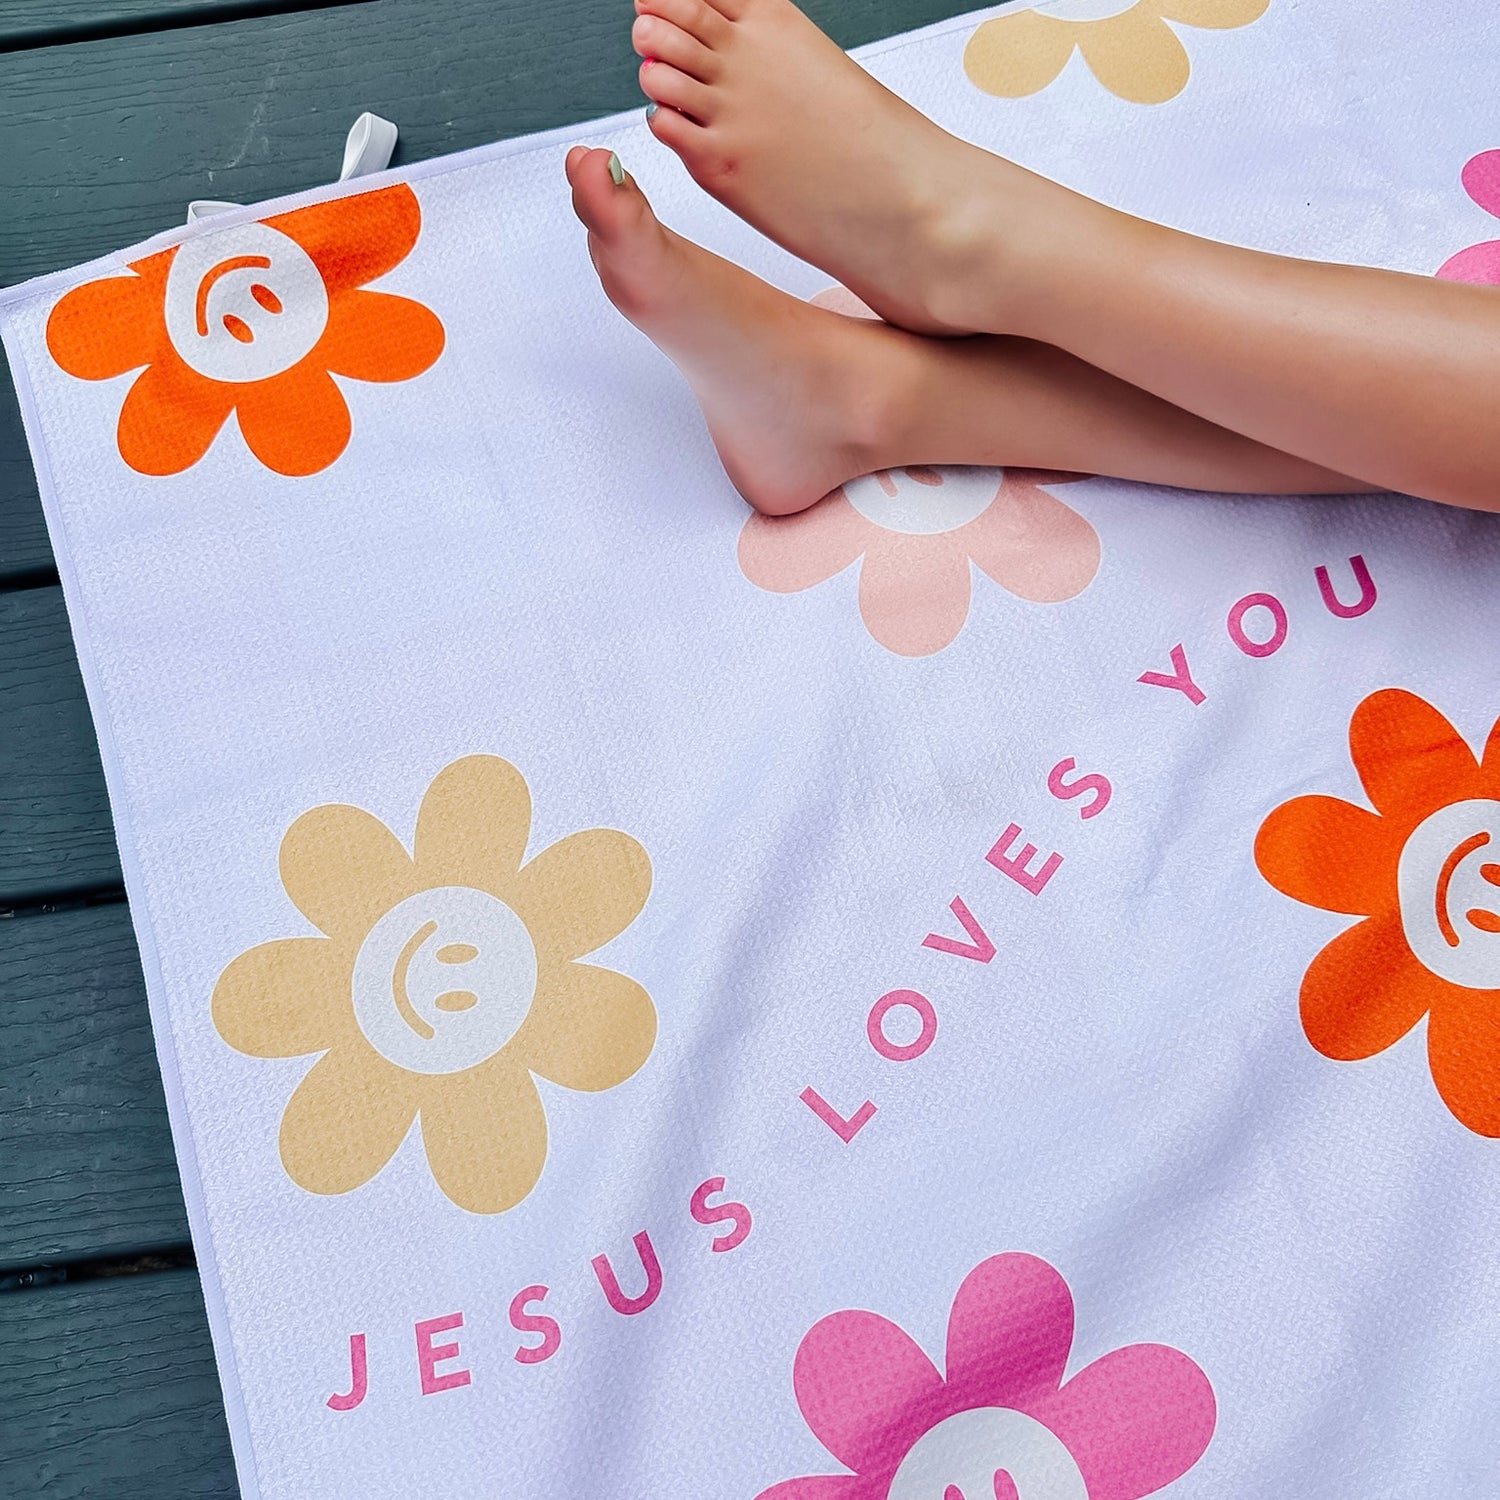 Jesus Loves You towel